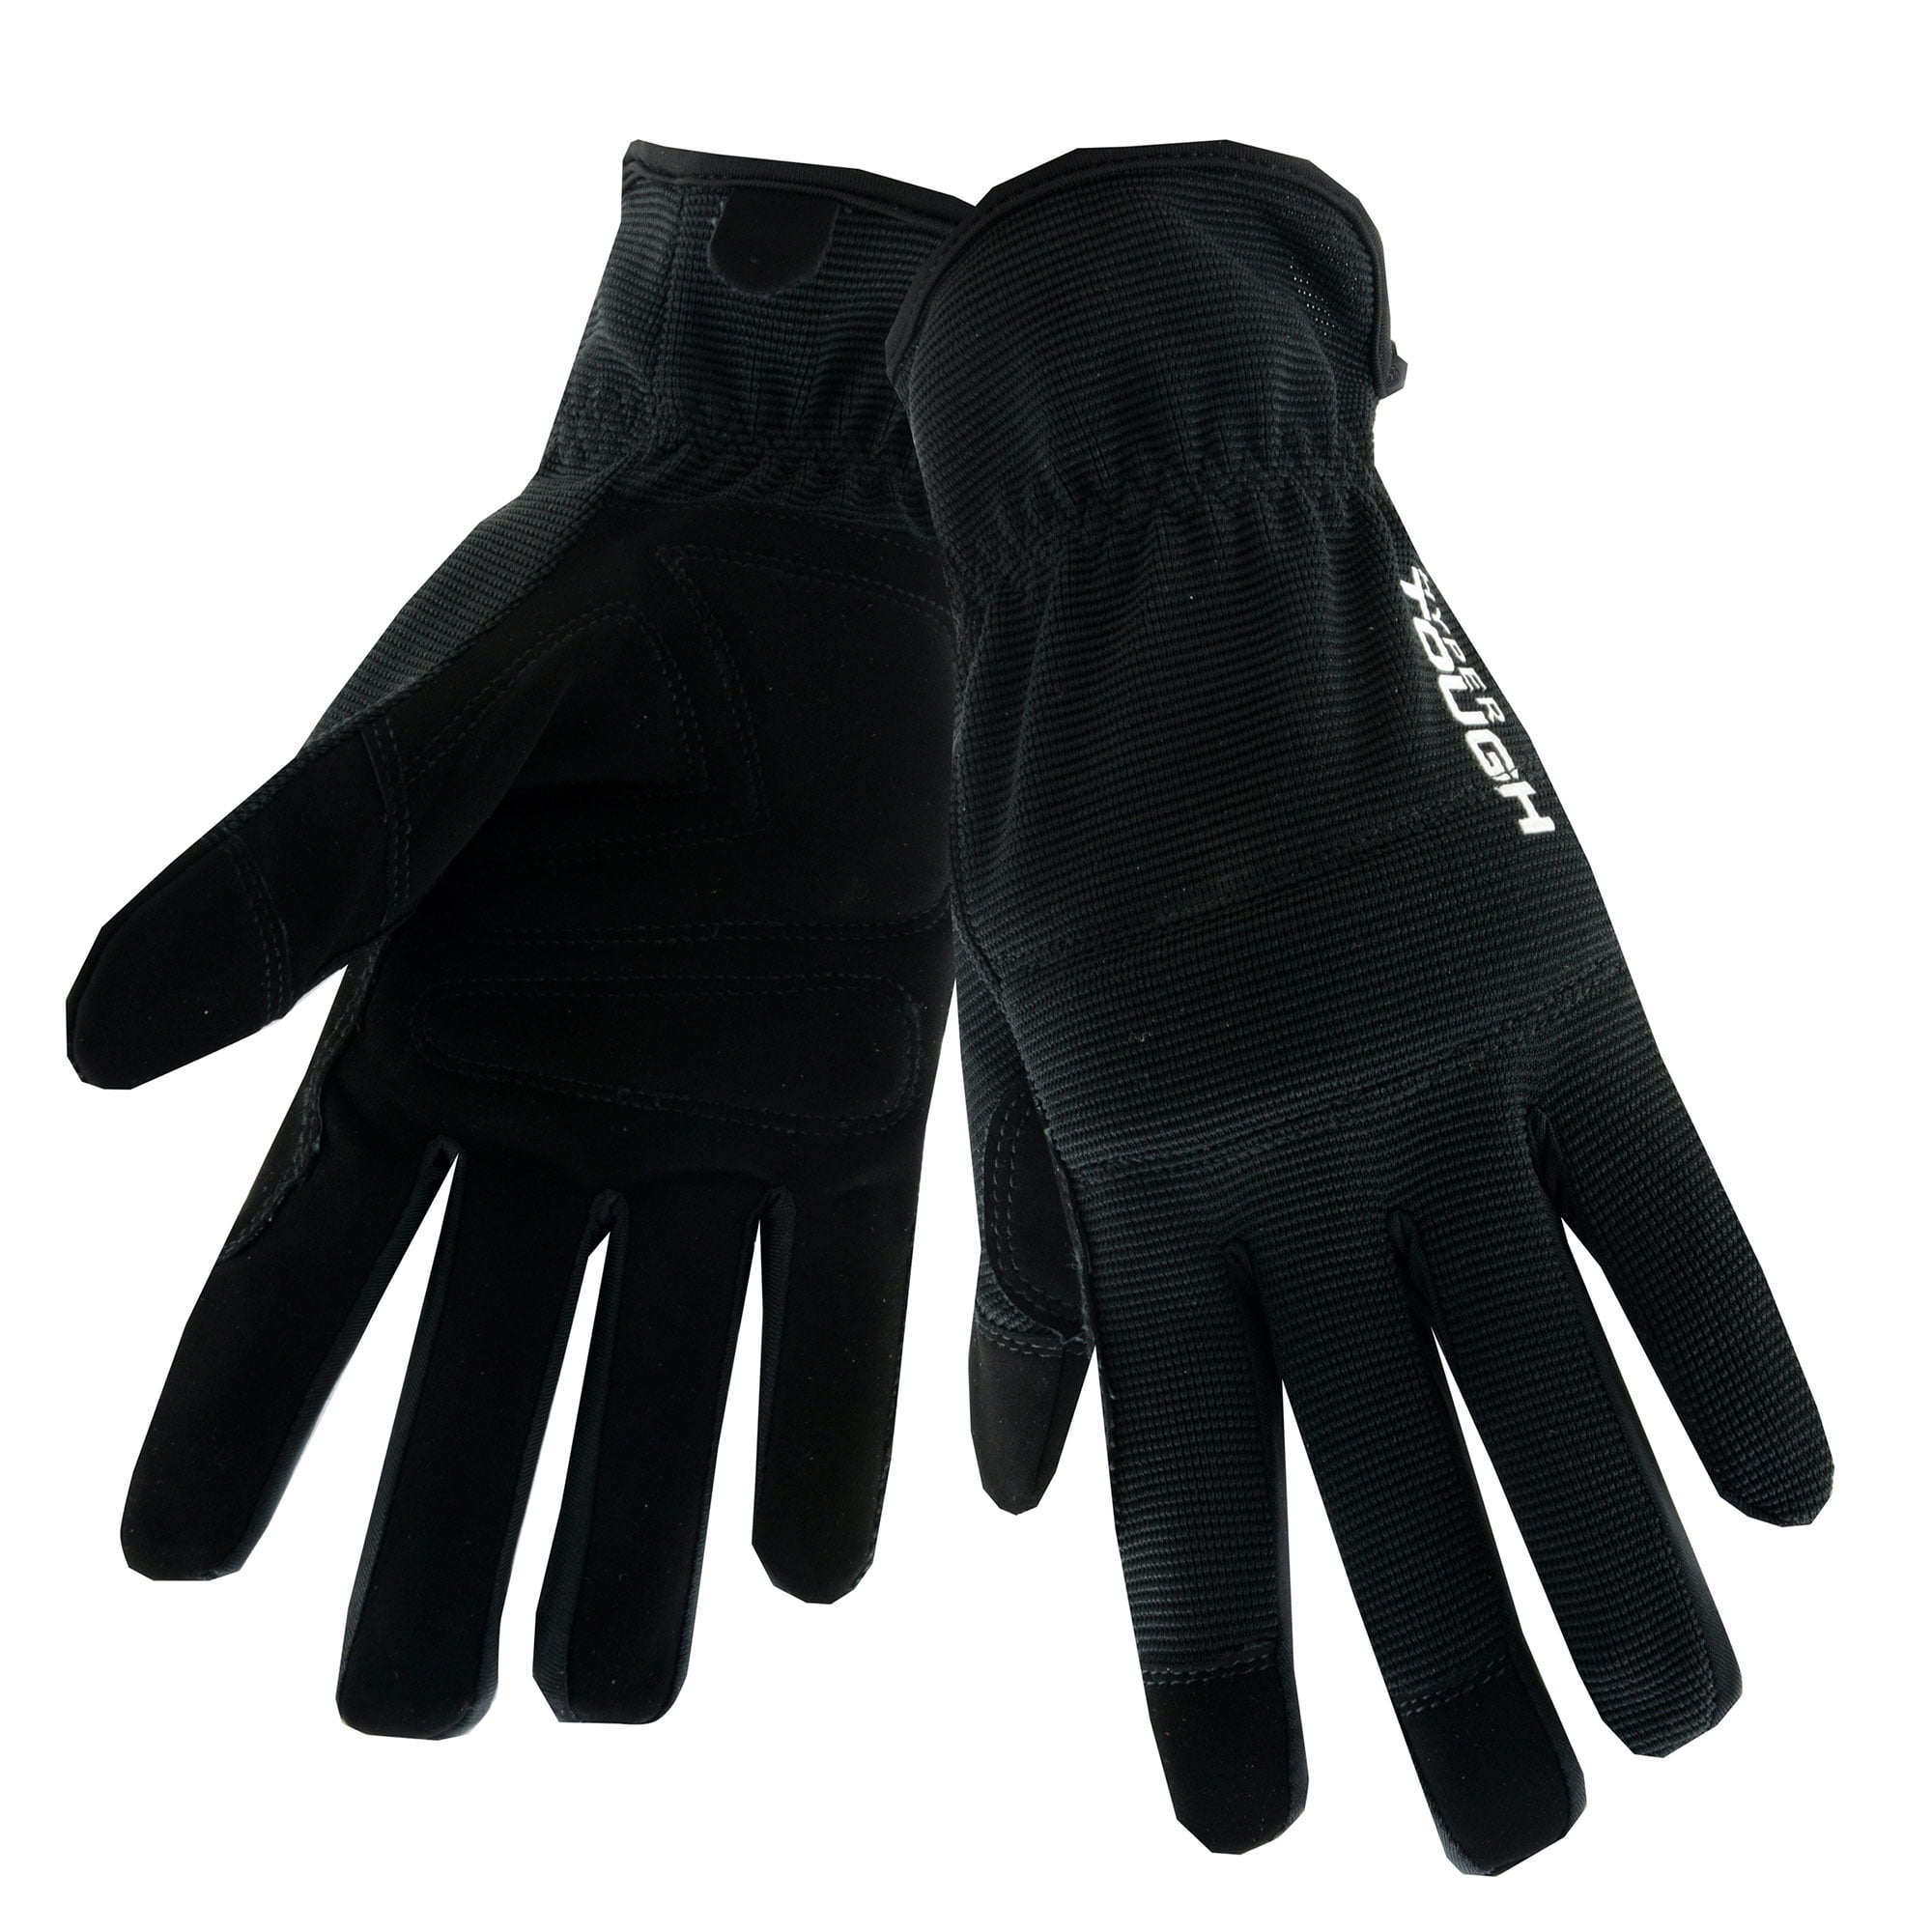 Safe Handler Large/X-Large, Tough Pro Grip Gloves, Knuckle Guard, Thick Protection, Non-Slip Rough Grip (2-Pairs), Black